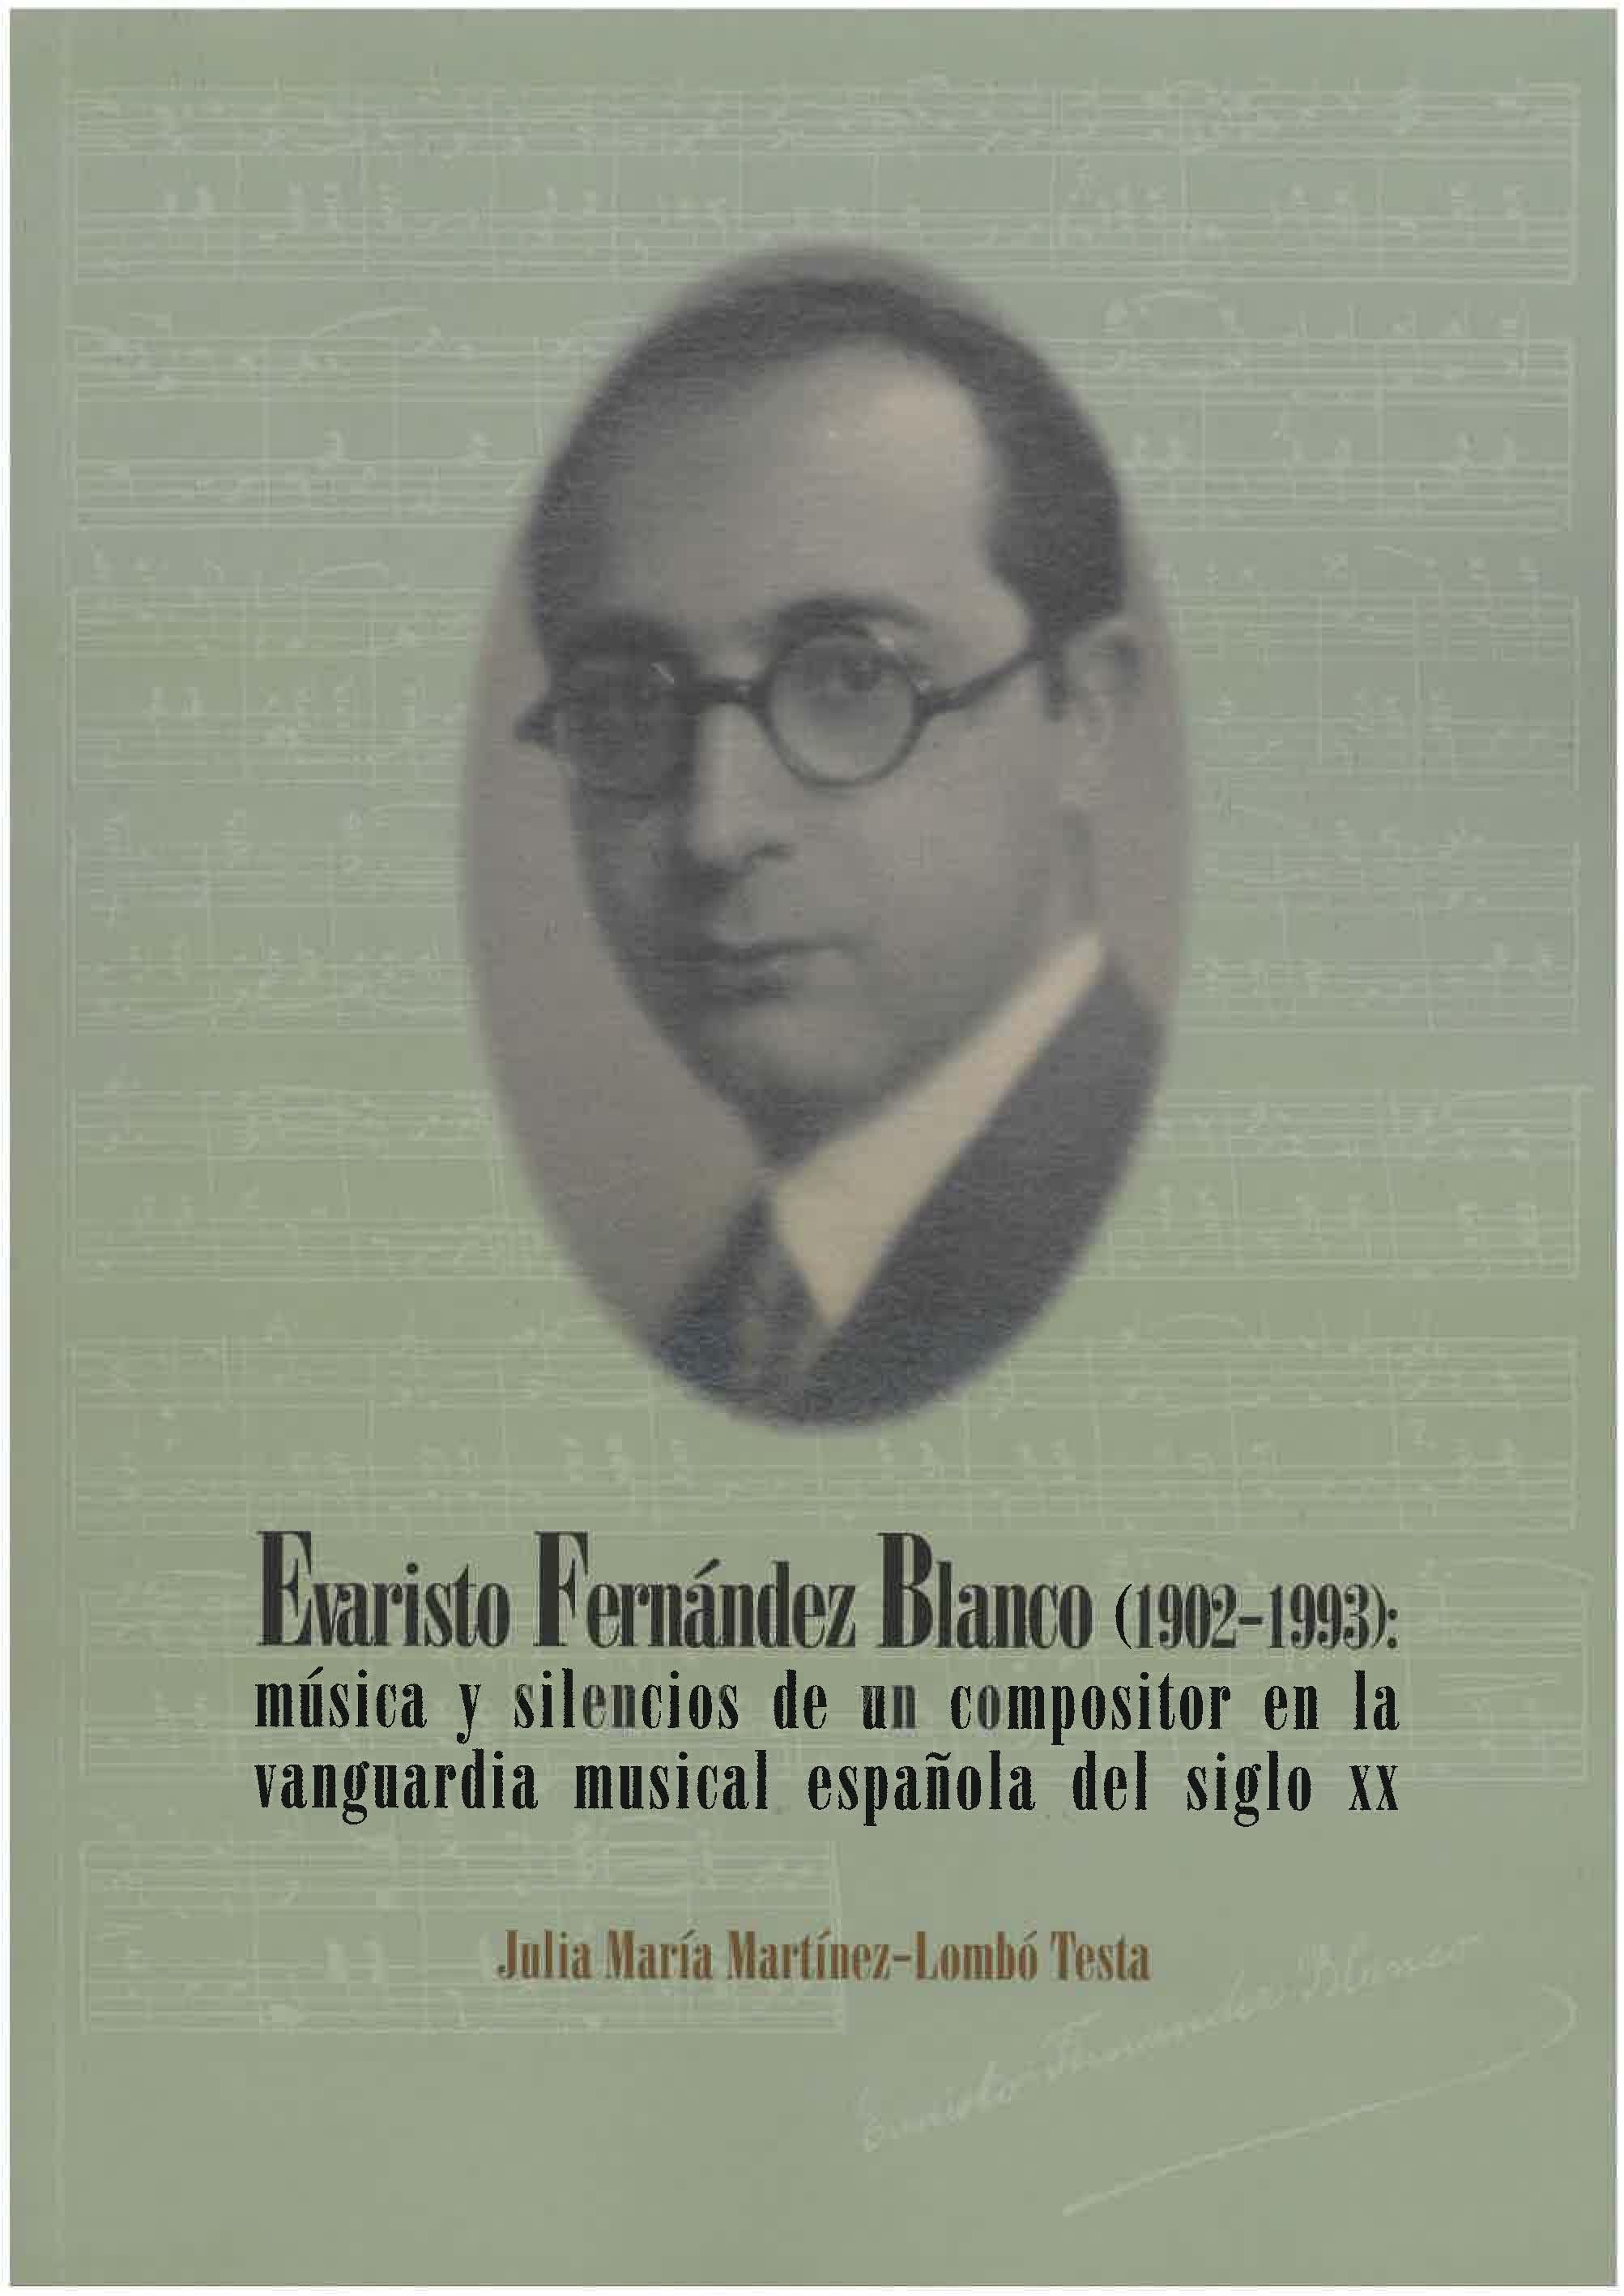 EVARISTO FERNANDEZ BLANCO 1902-1993